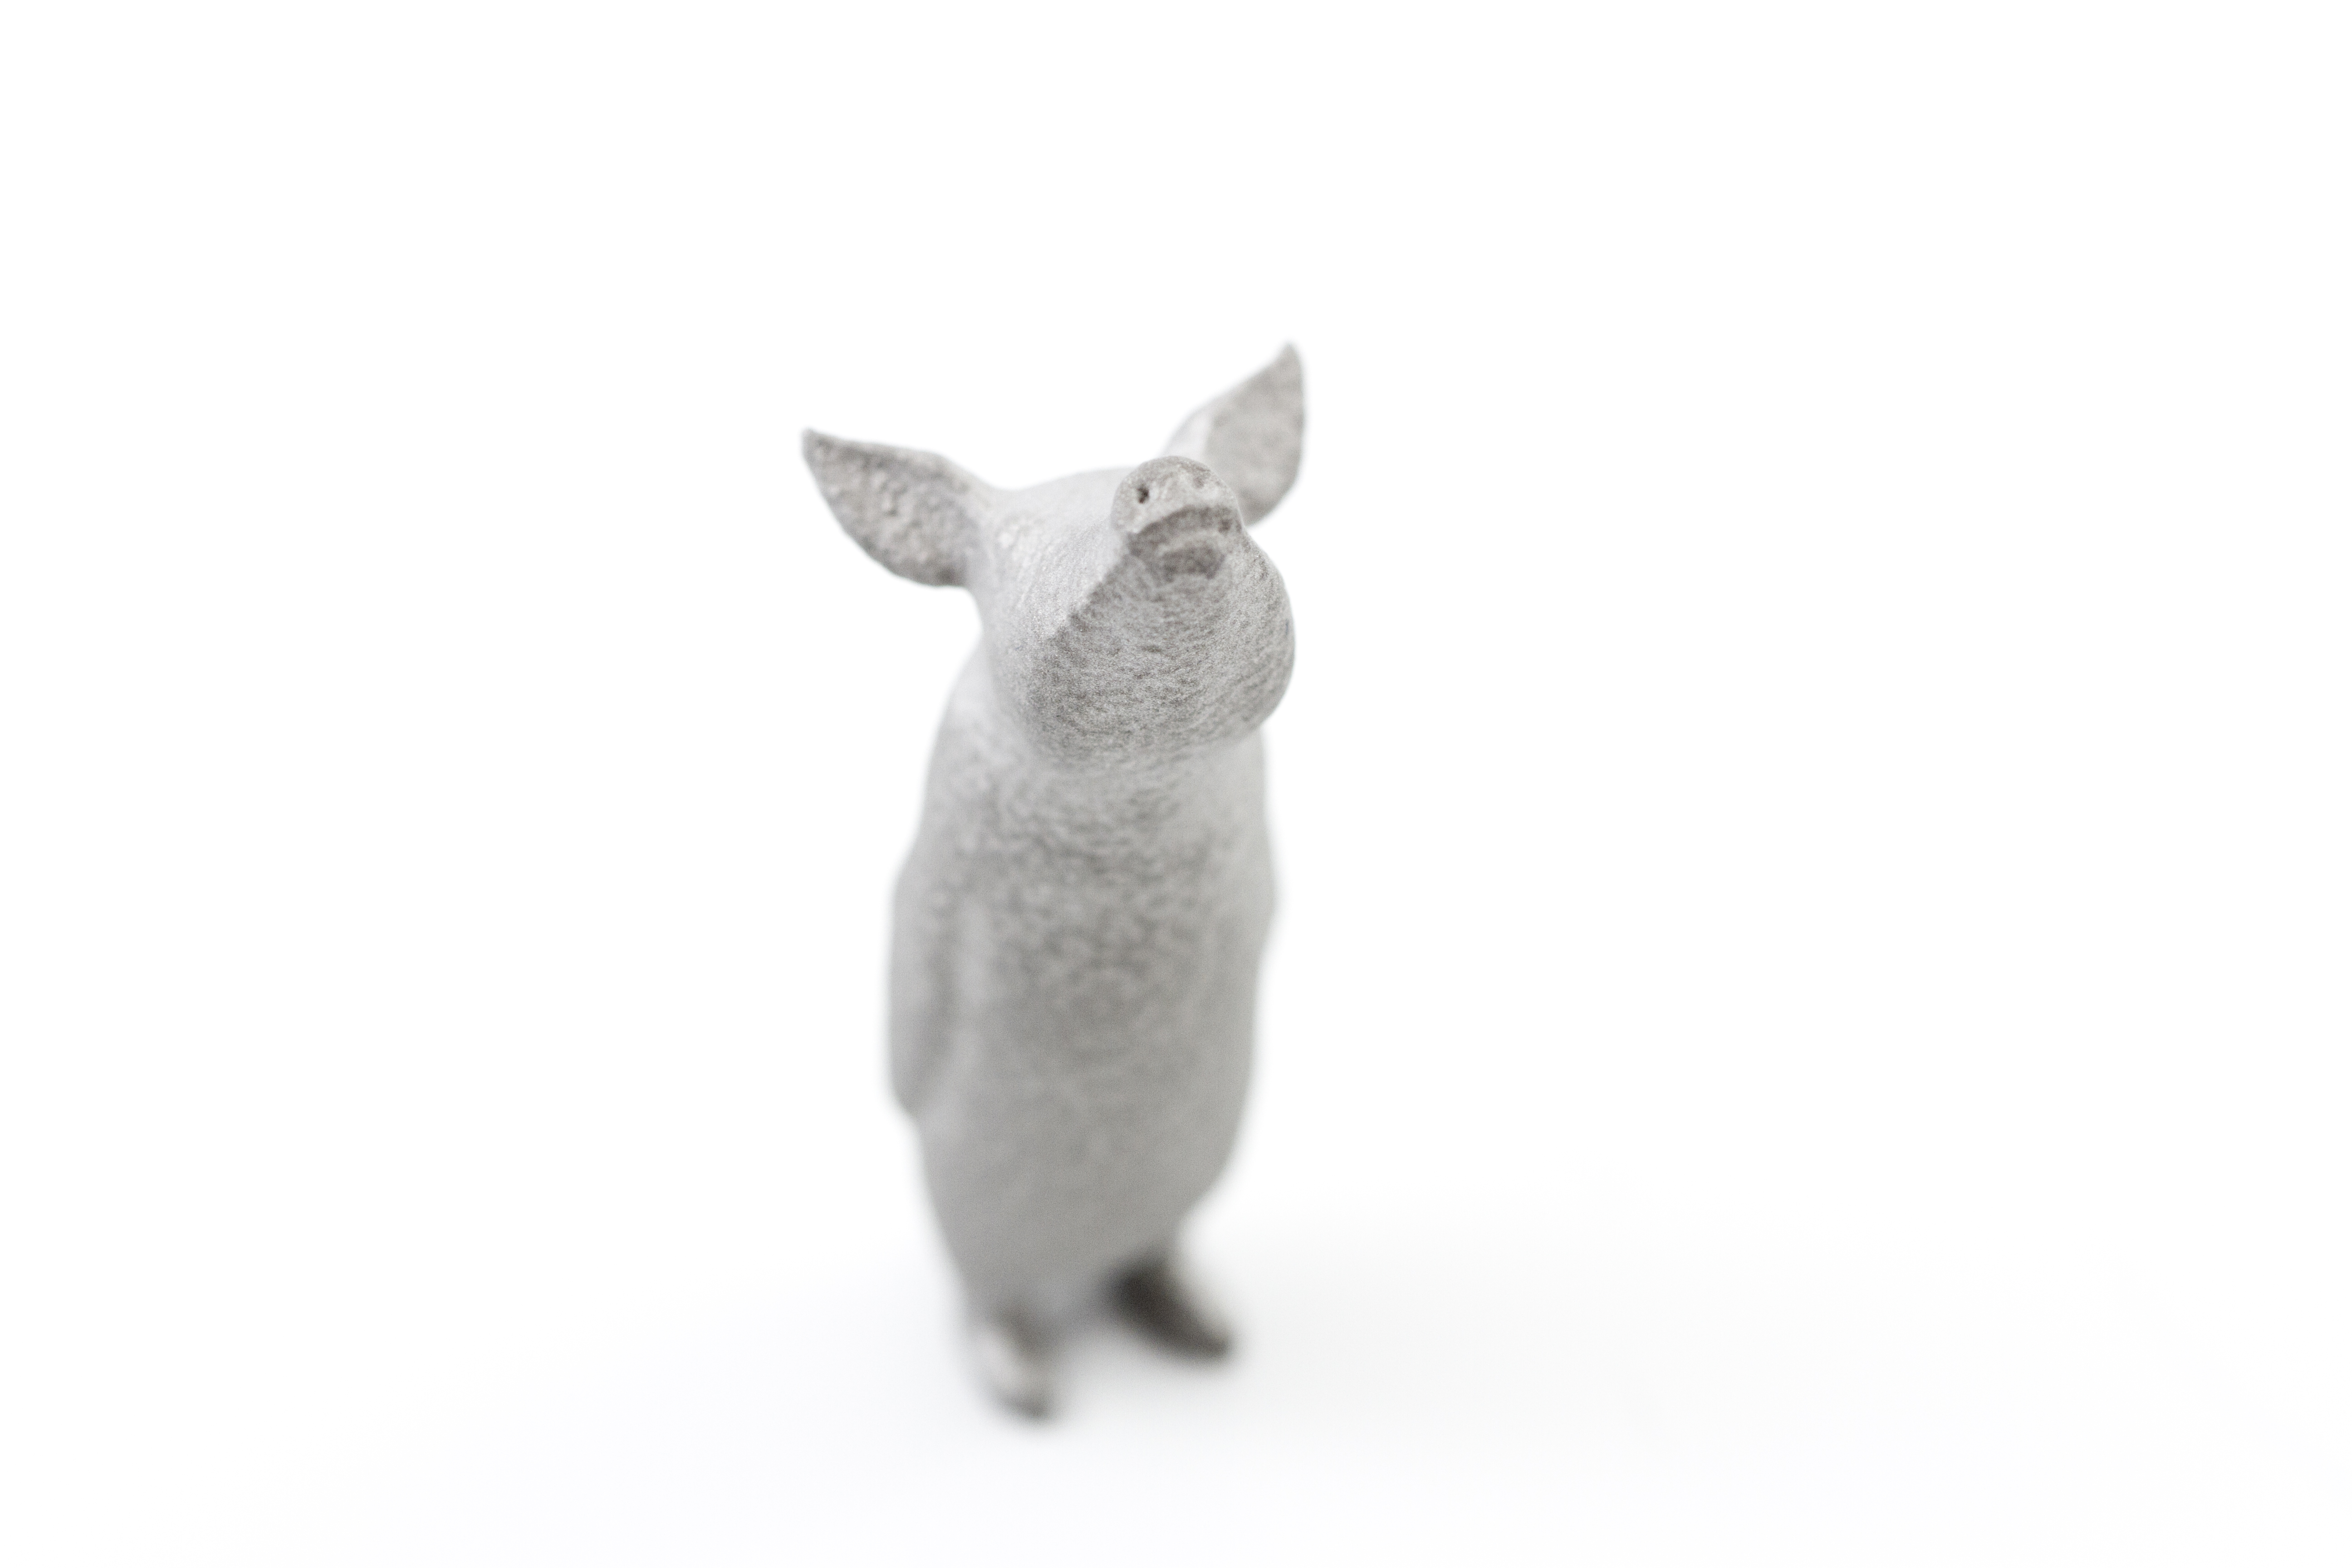 imaterialise aluminum 3d printing piguin by bert de niel